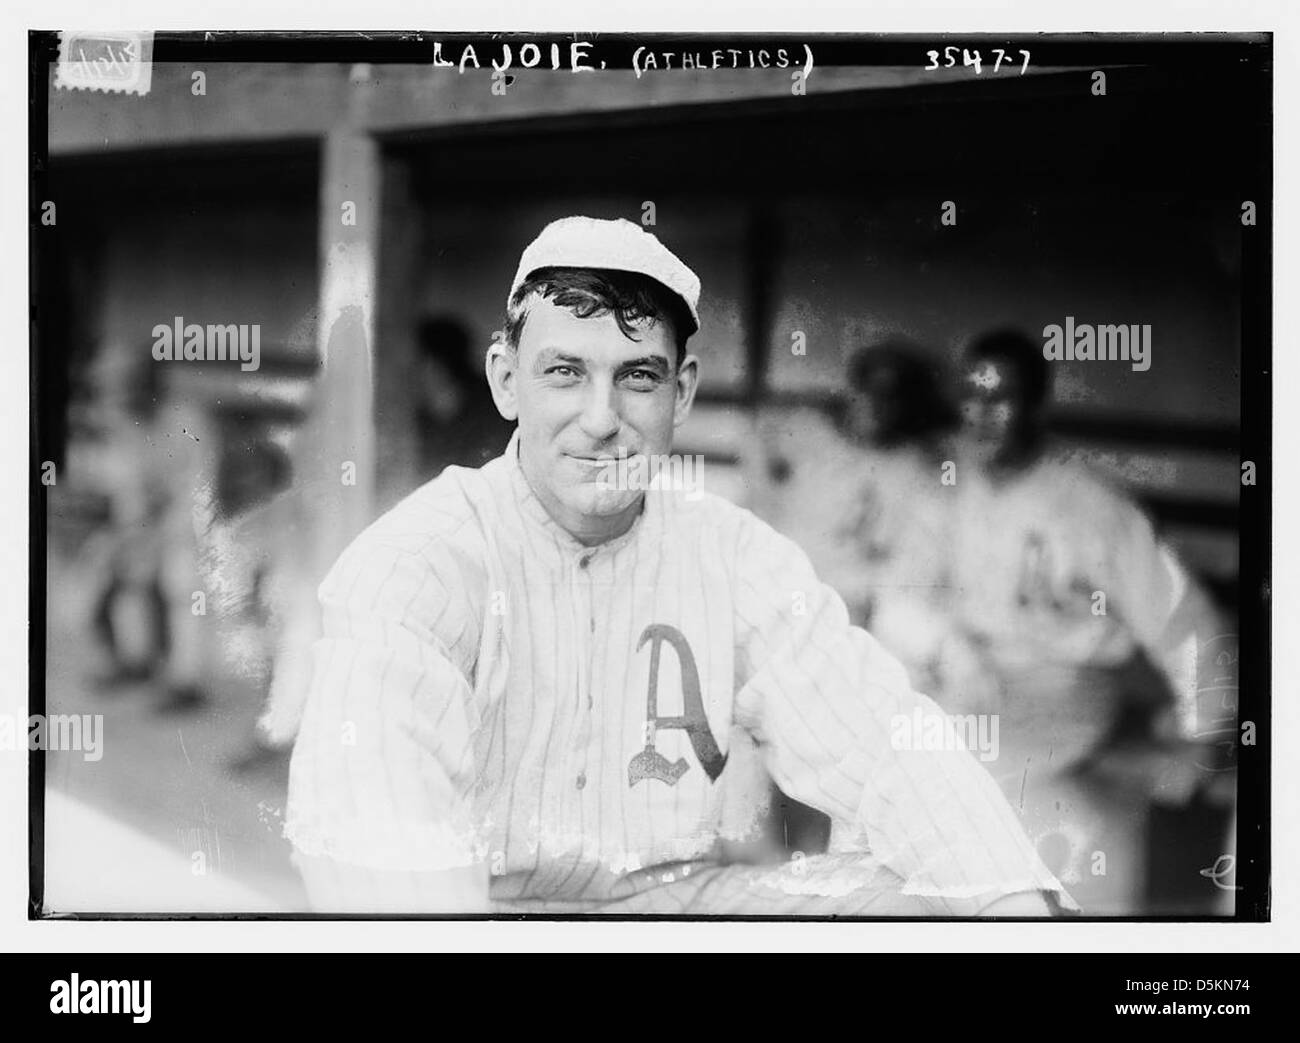 [Nap Lajoie, Philadelphia AL (baseball)] (LOC) Foto Stock